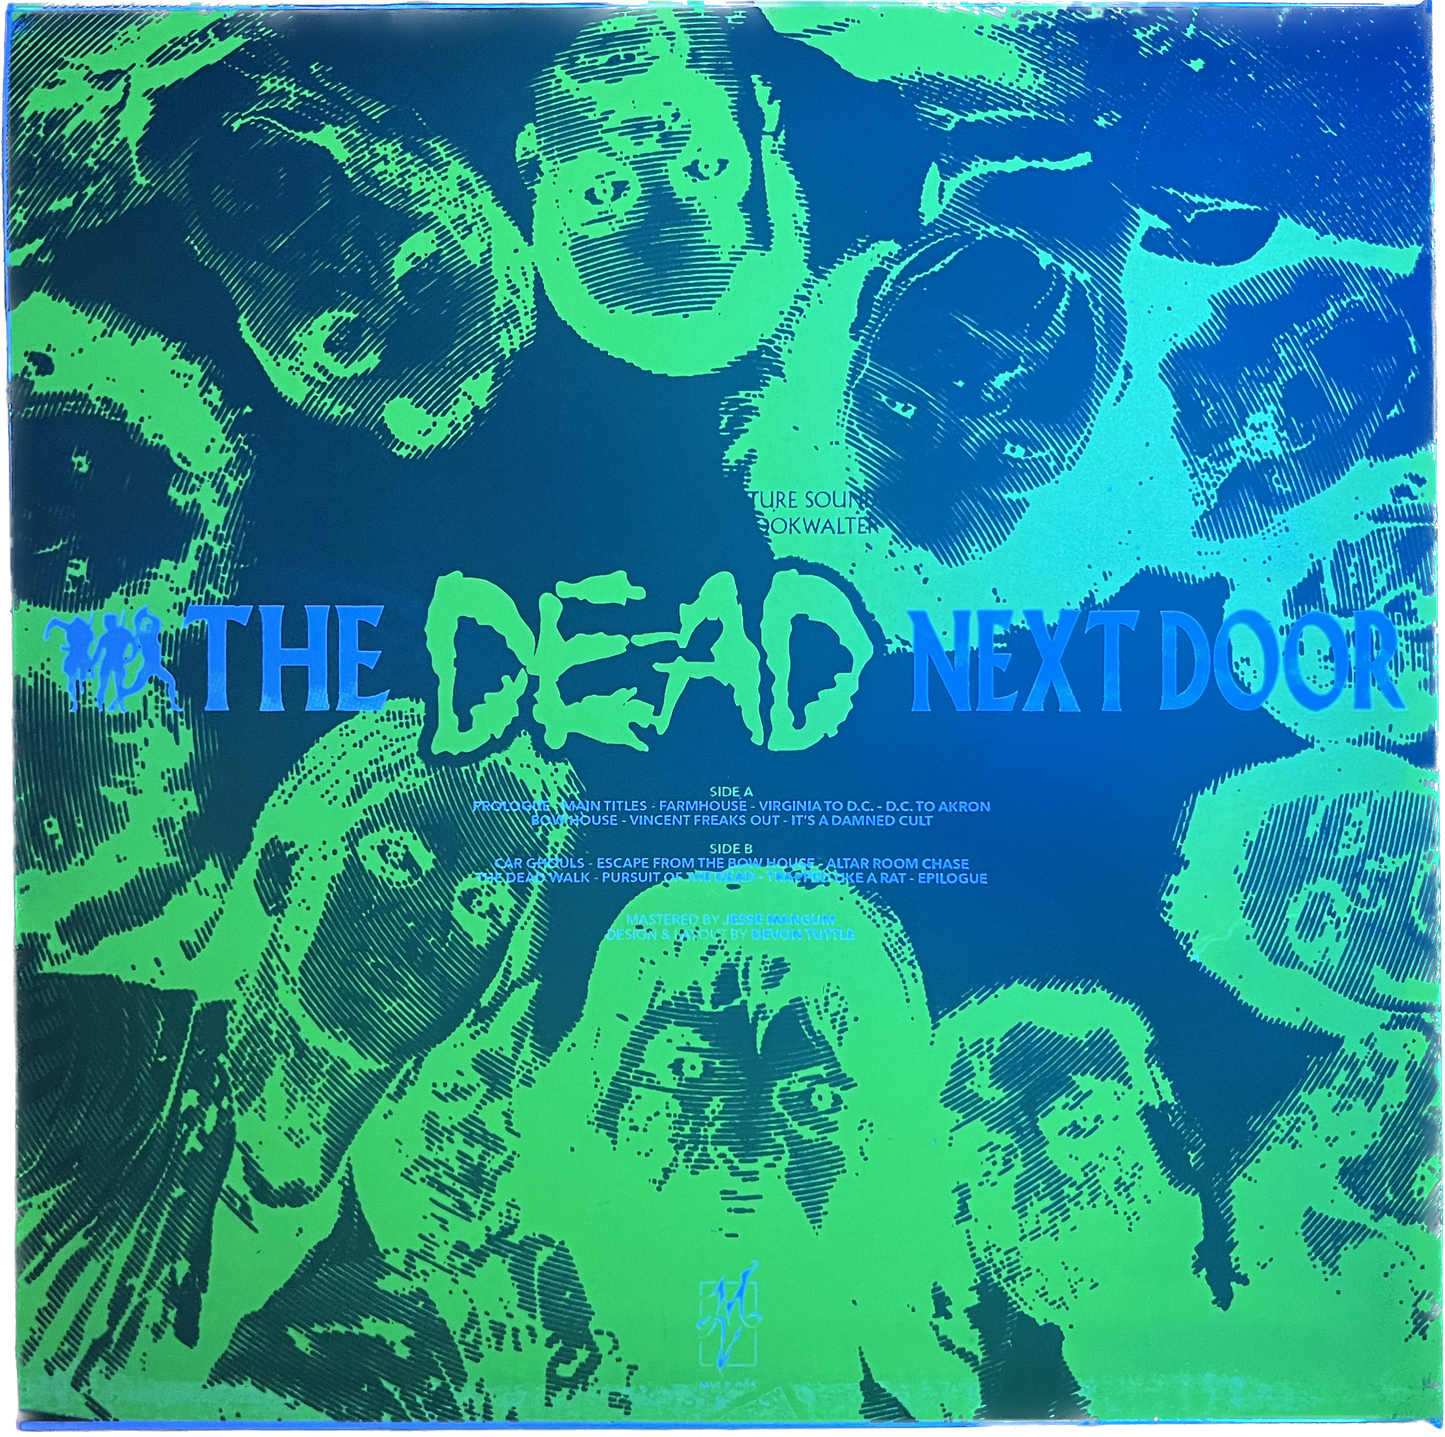 THE DEAD NEXT DOOR (1989) OST LP SCREEN PRINTED GREEN GLOWING VARIANT